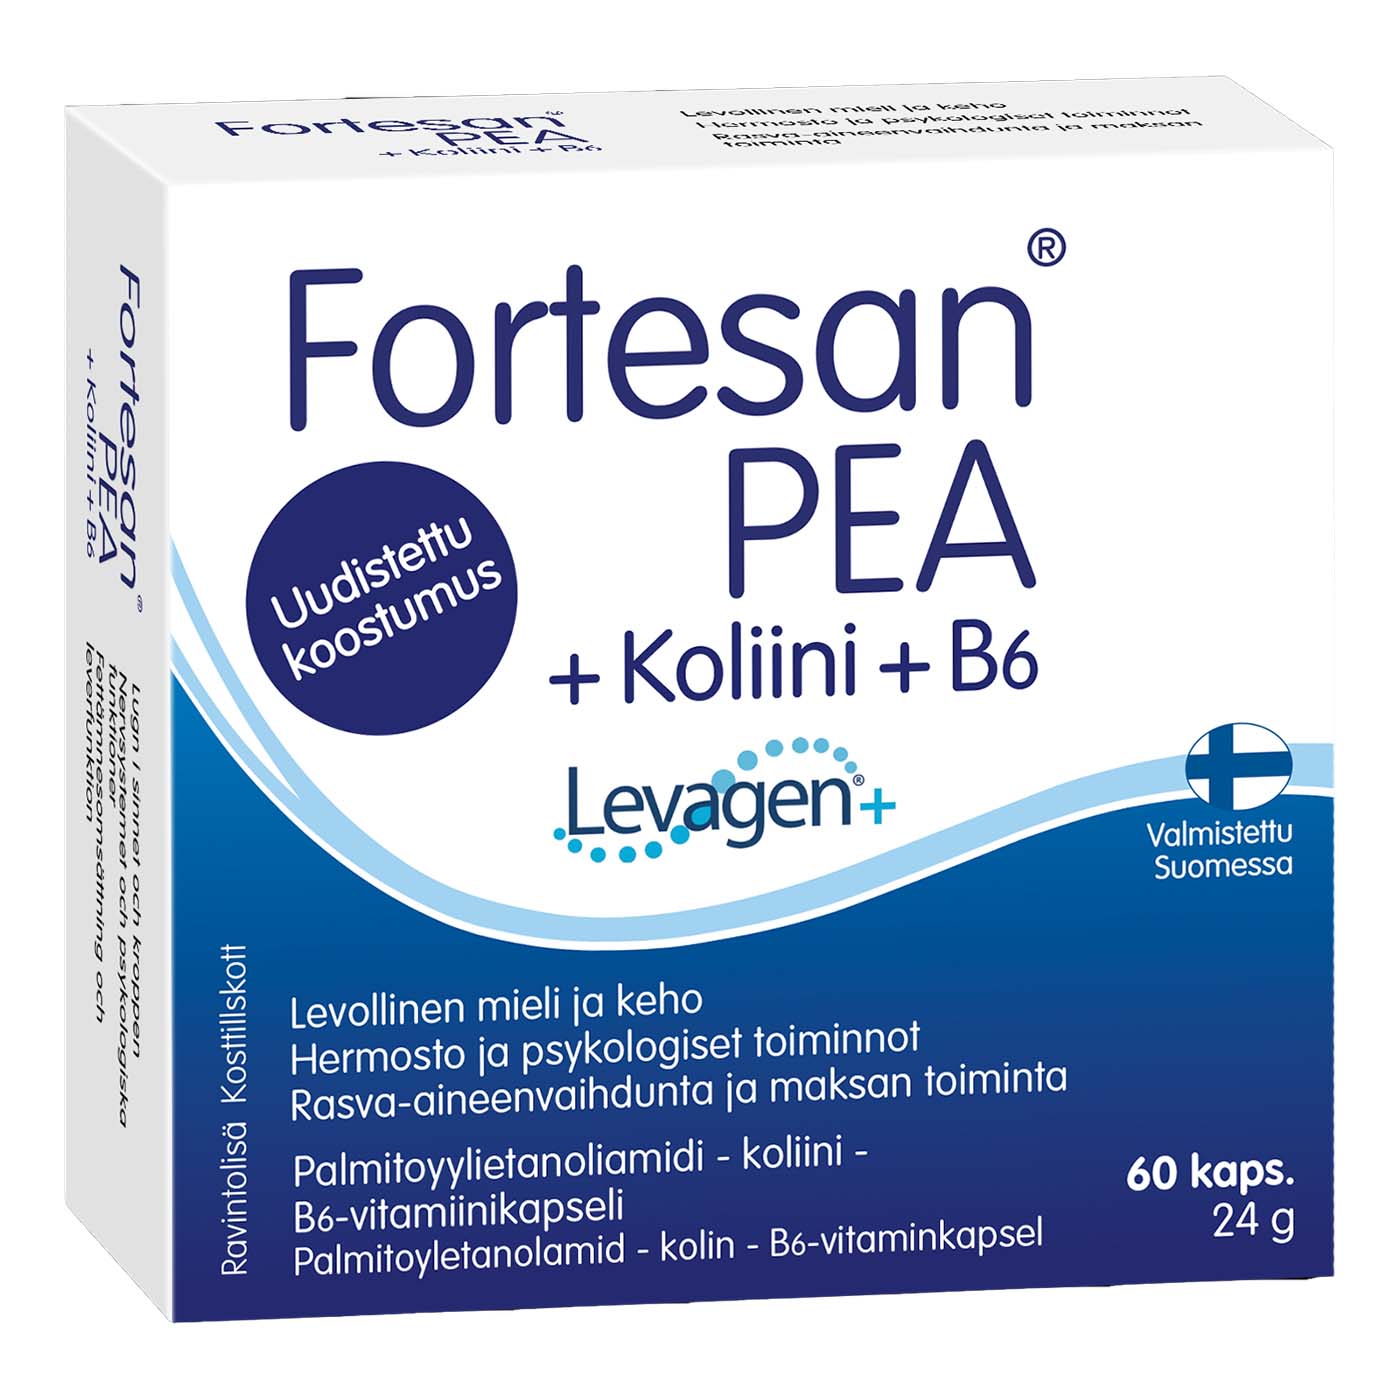 Fortesan PEA supplement